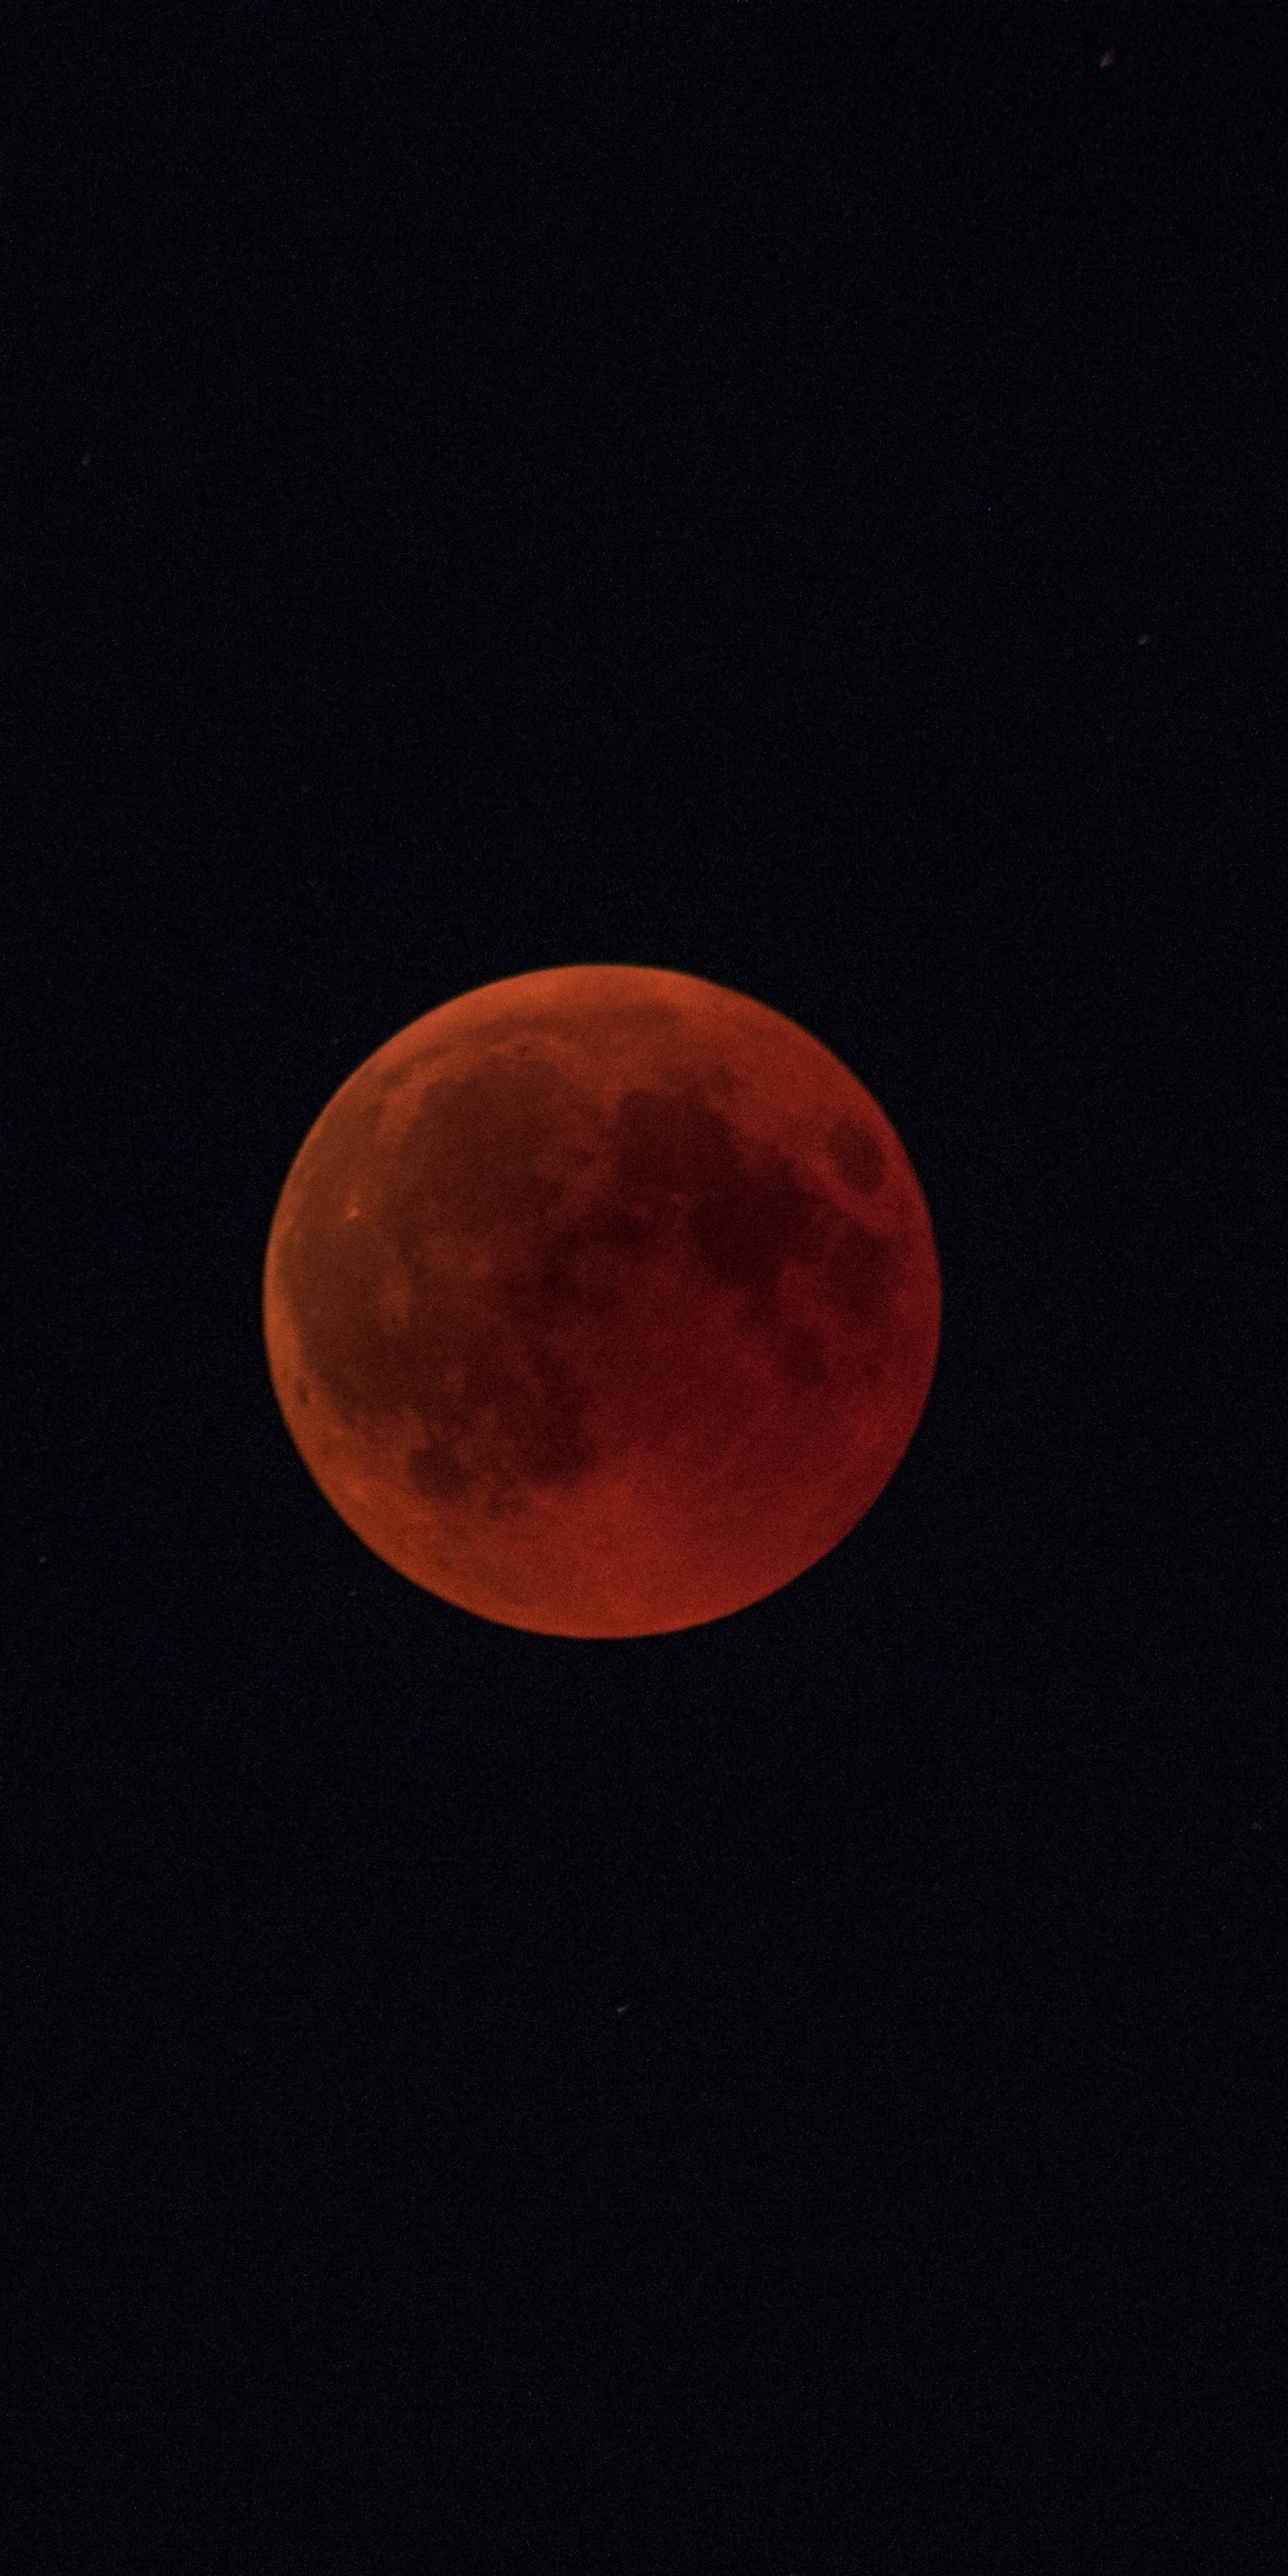 Lunar Eclipse Photos Download The BEST Free Lunar Eclipse Stock Photos   HD Images